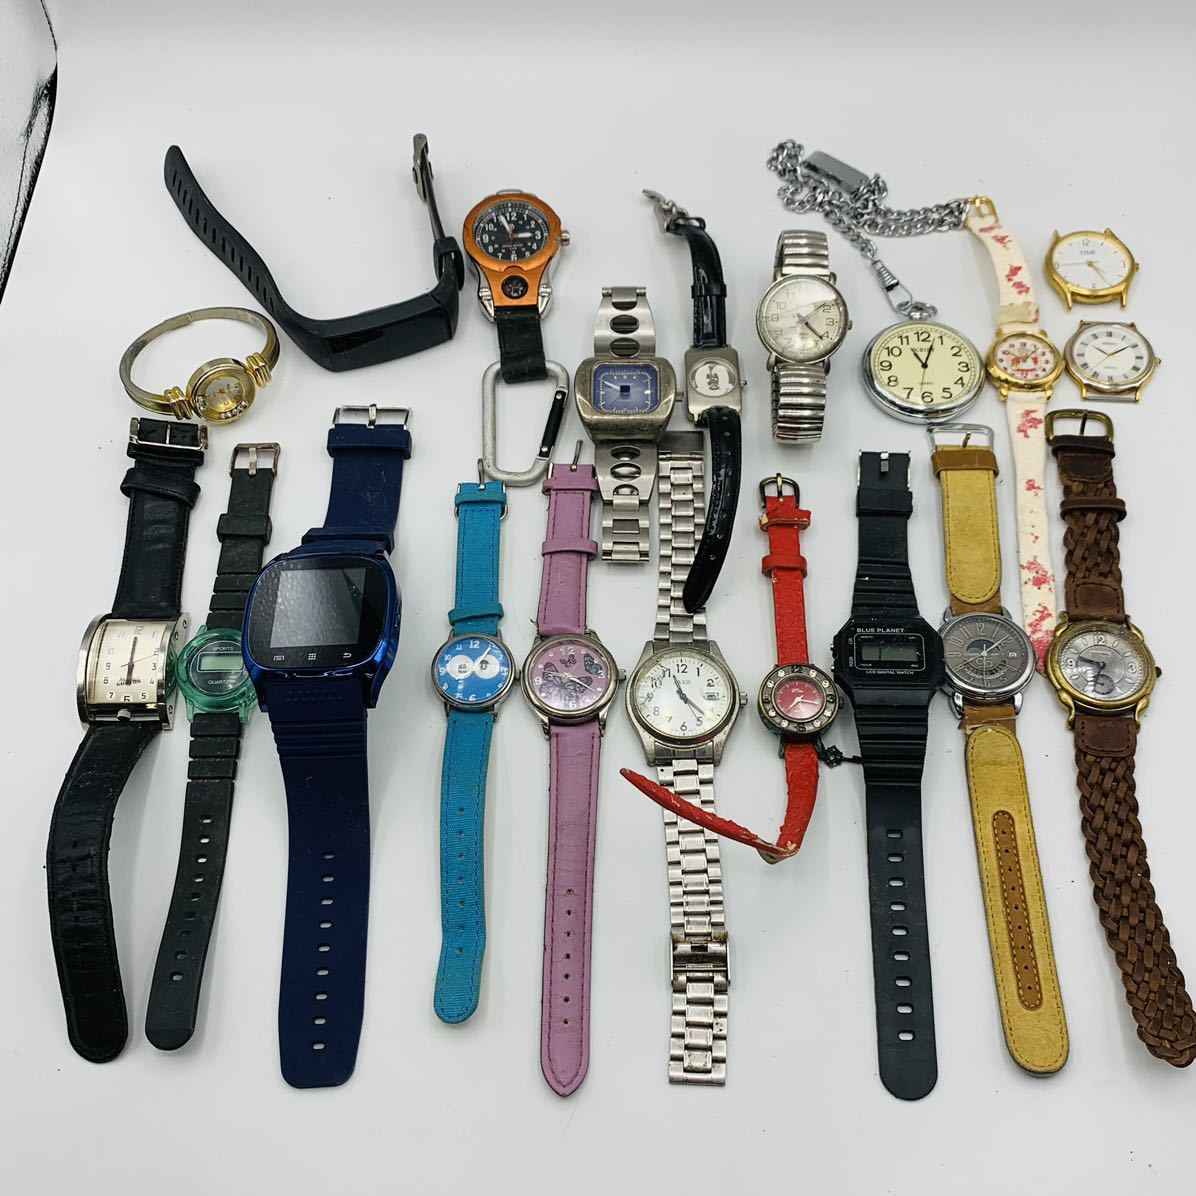 HG1 262 時計20点 まとめ売り まとめて 大量 腕時計 懐中時計 SEIKO セイコー FOSSIL フォッシル デジタル スマートウォッチ カレンダー TY_画像1